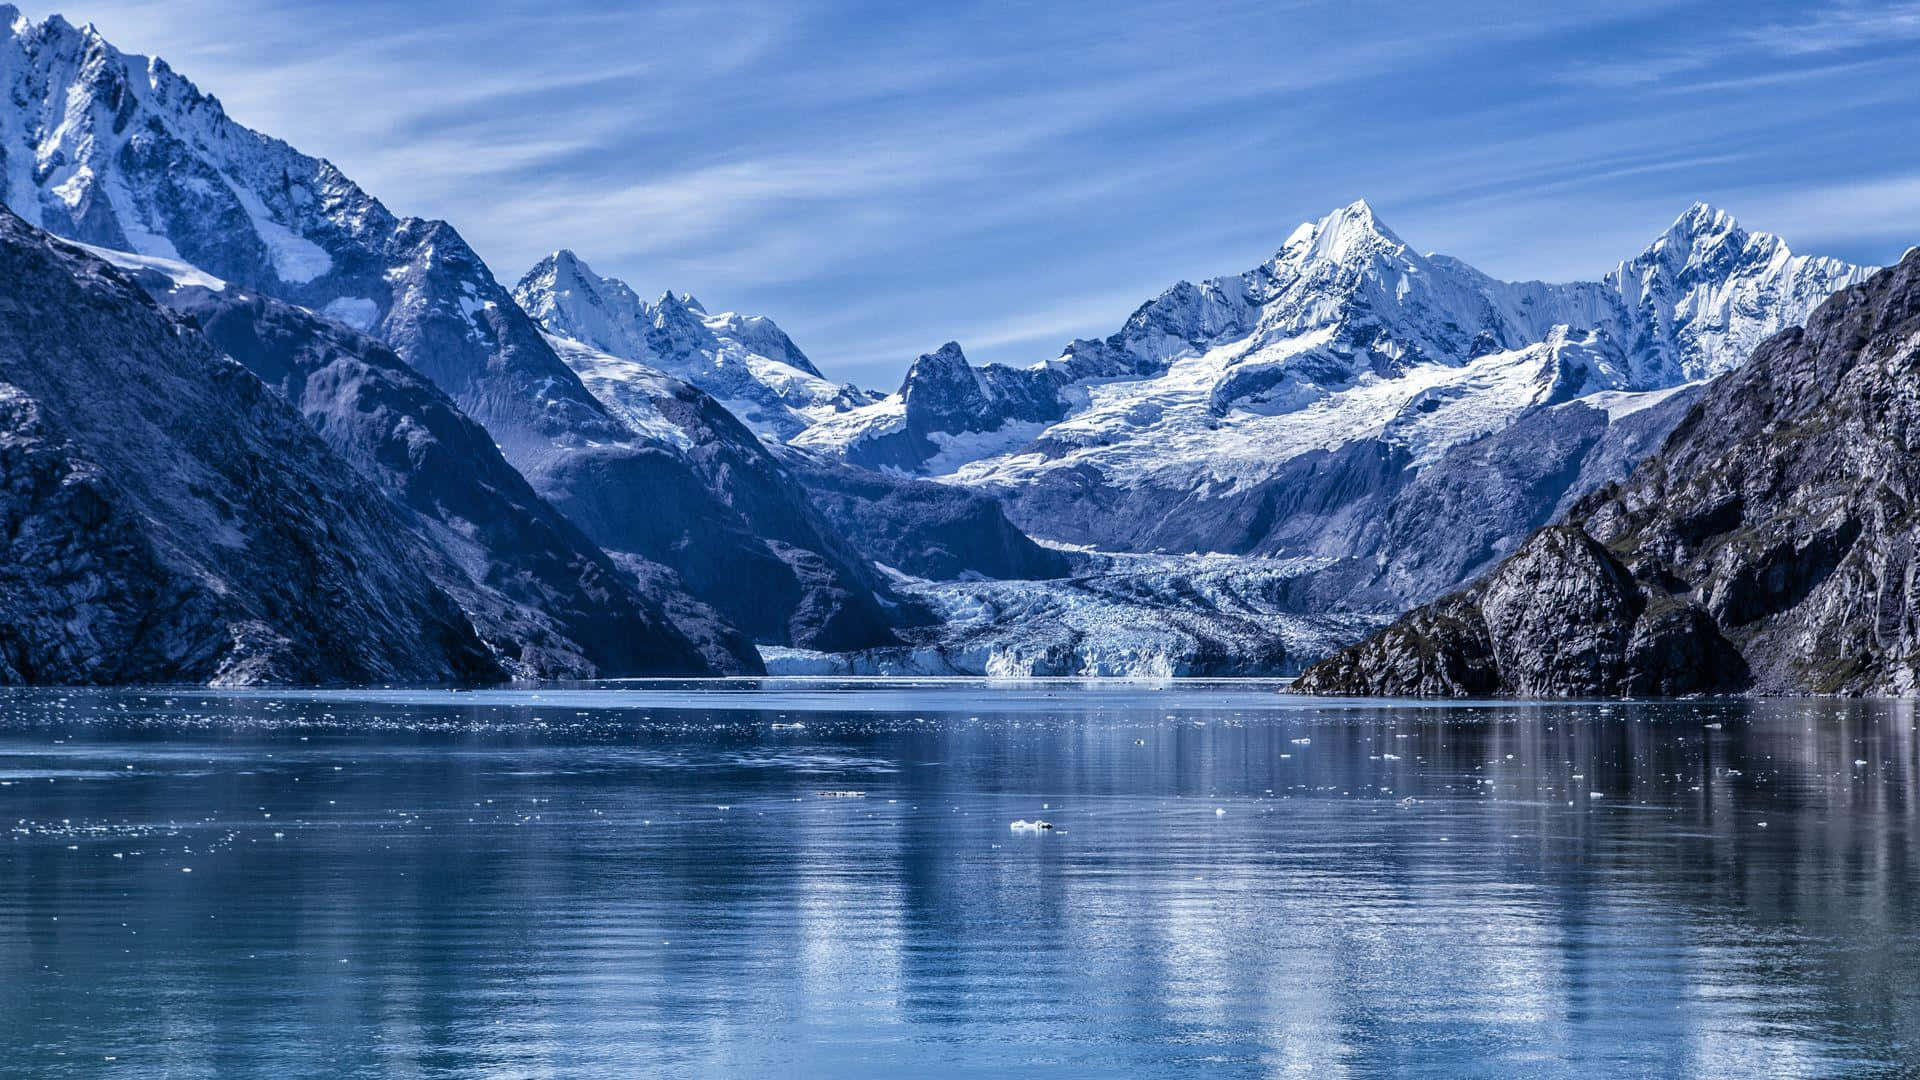 Blue Mountain Scenery Glacier Bay National Park Wallpaper